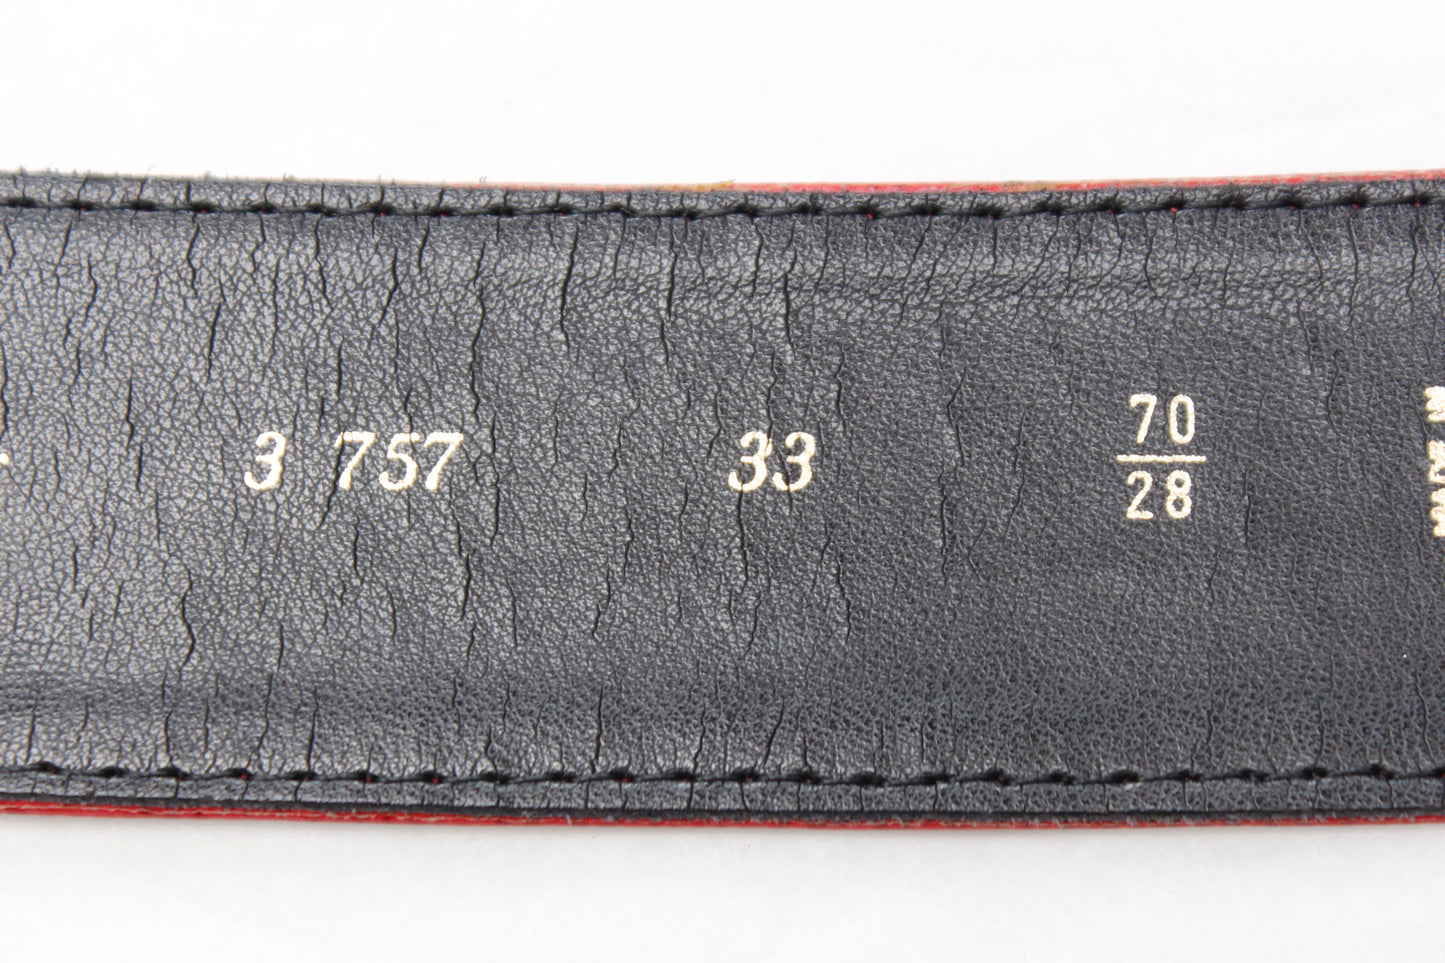 Yves Saint Laurent red leather belt